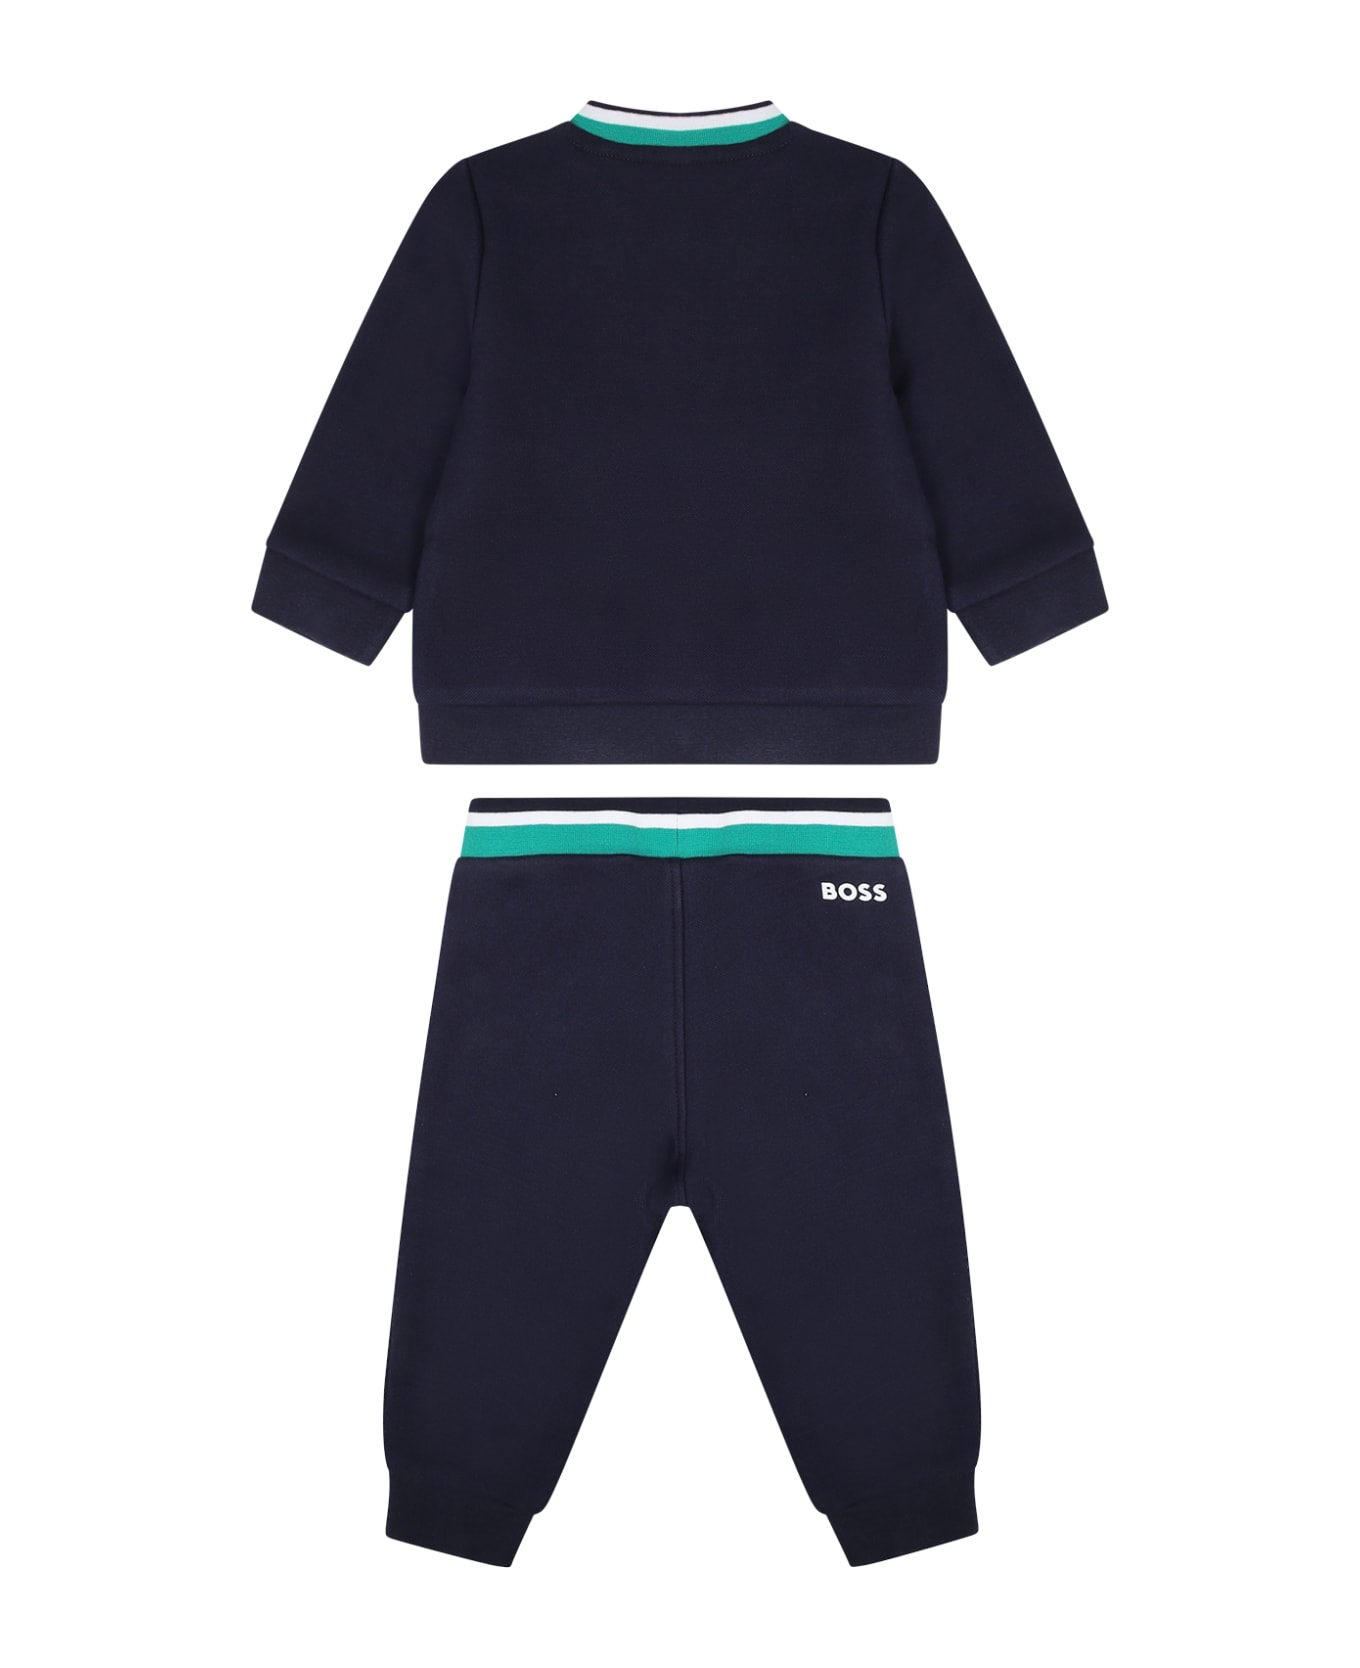 Hugo Boss Blue Sport Suit Set For Baby Boy - Blue ボトムス